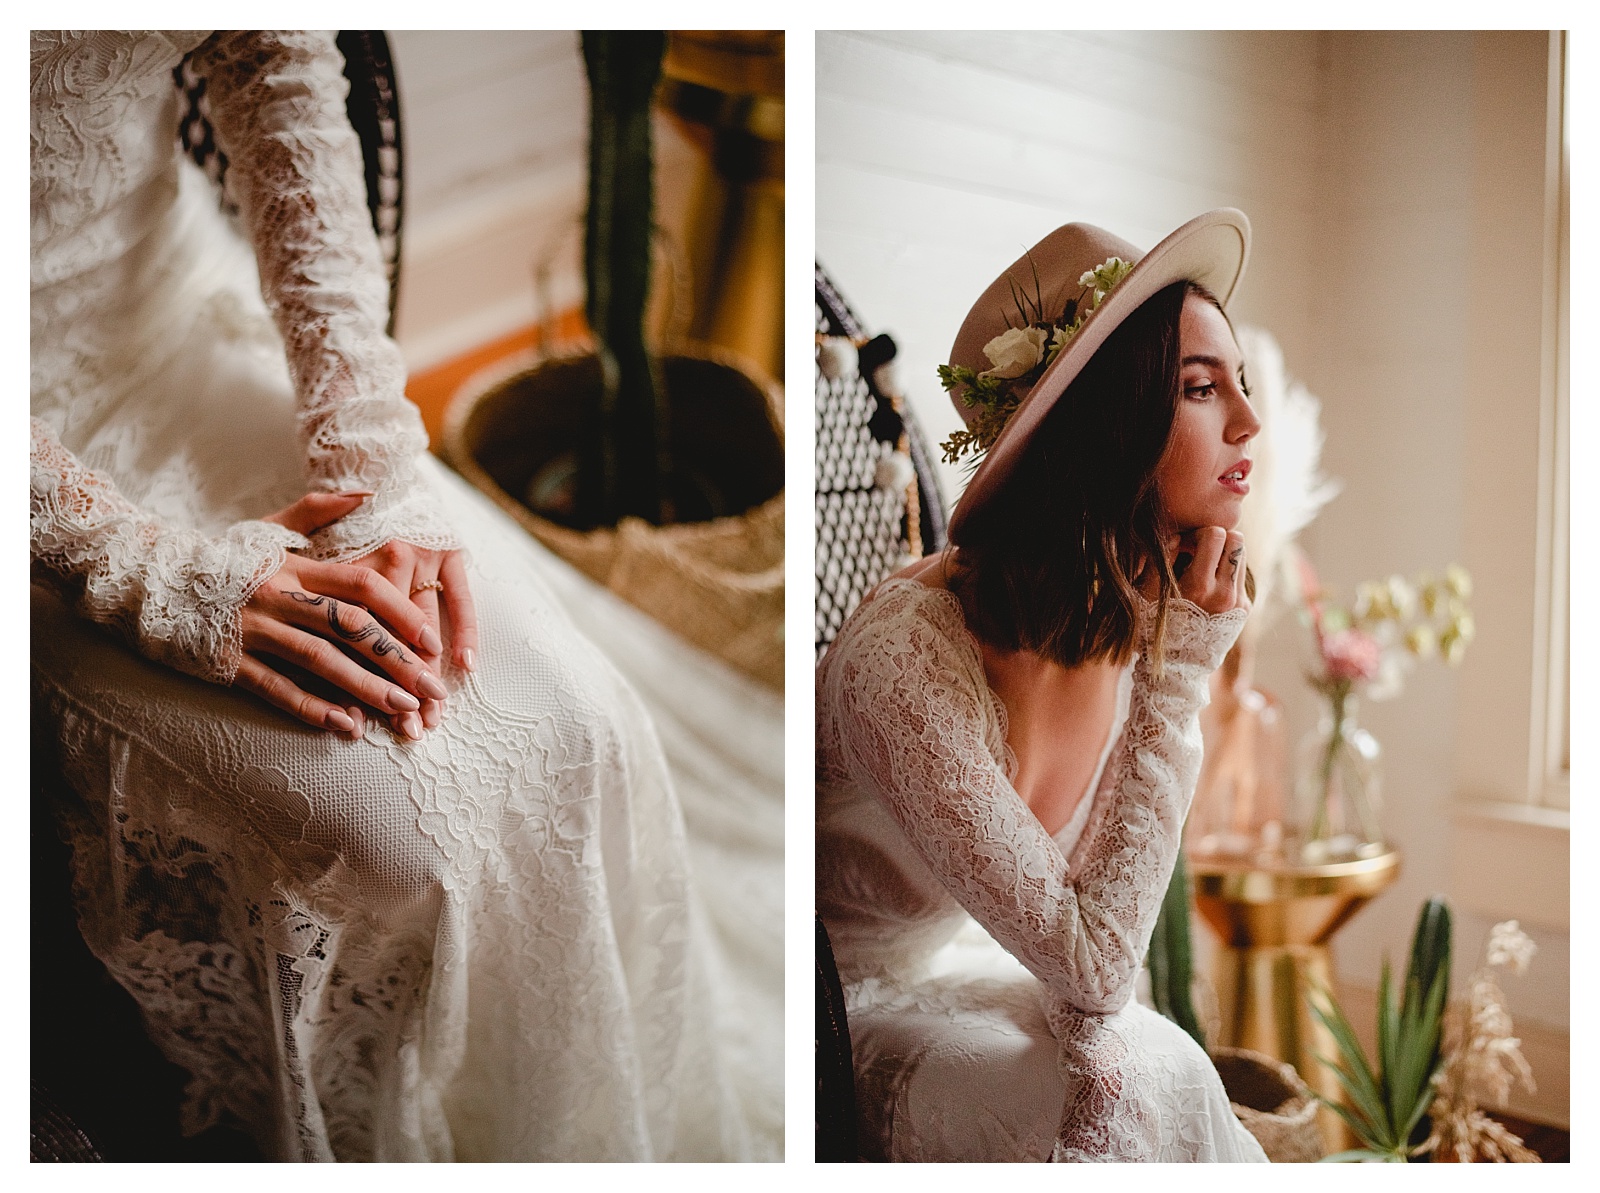 Detail photos during bridal photo shoot in Florida. 